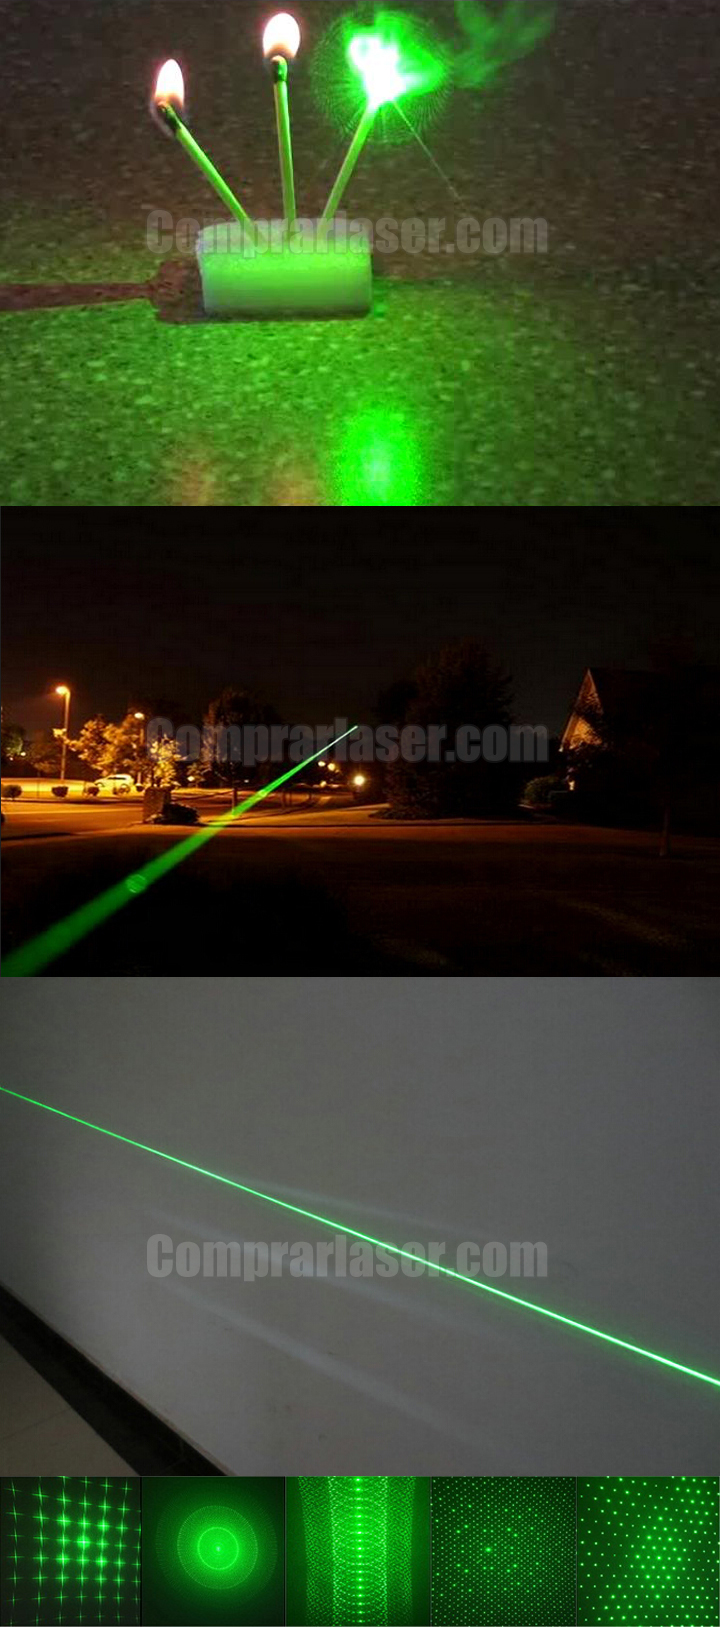 láser verde de largo alcance